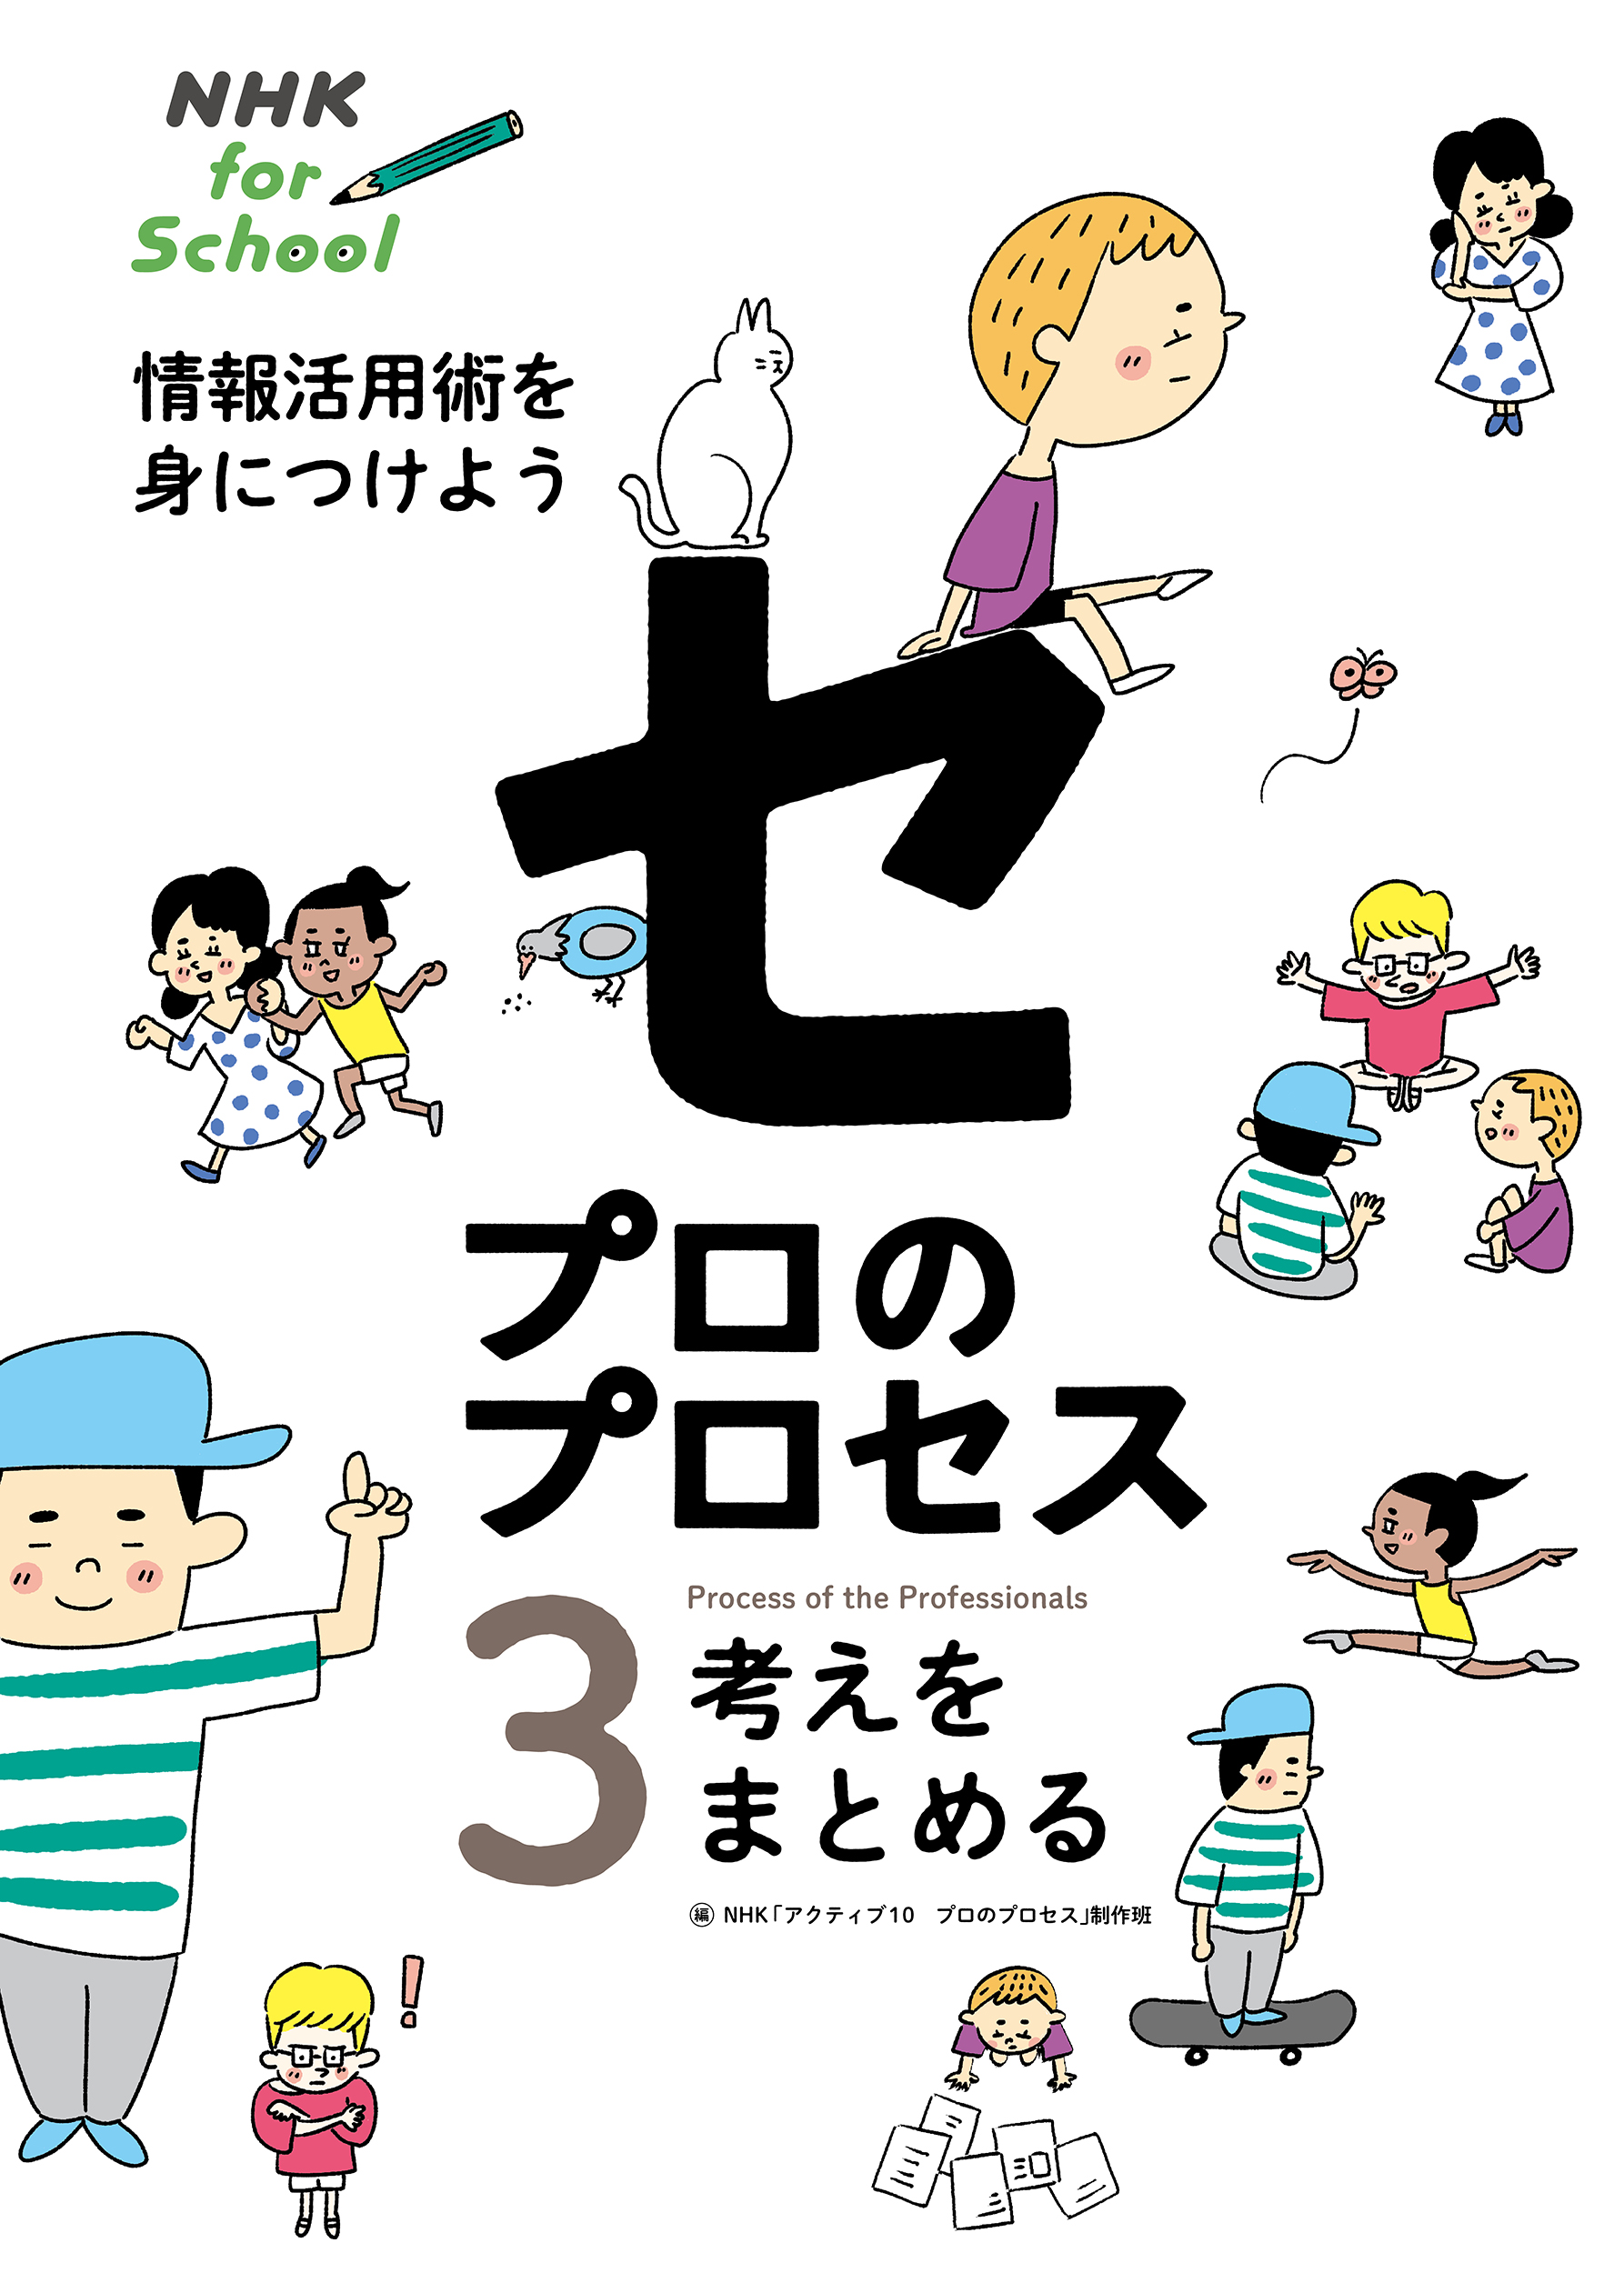 NHK for School　プロのプロセス　情報活用術を身につけよう　3　考えをまとめるの商品画像